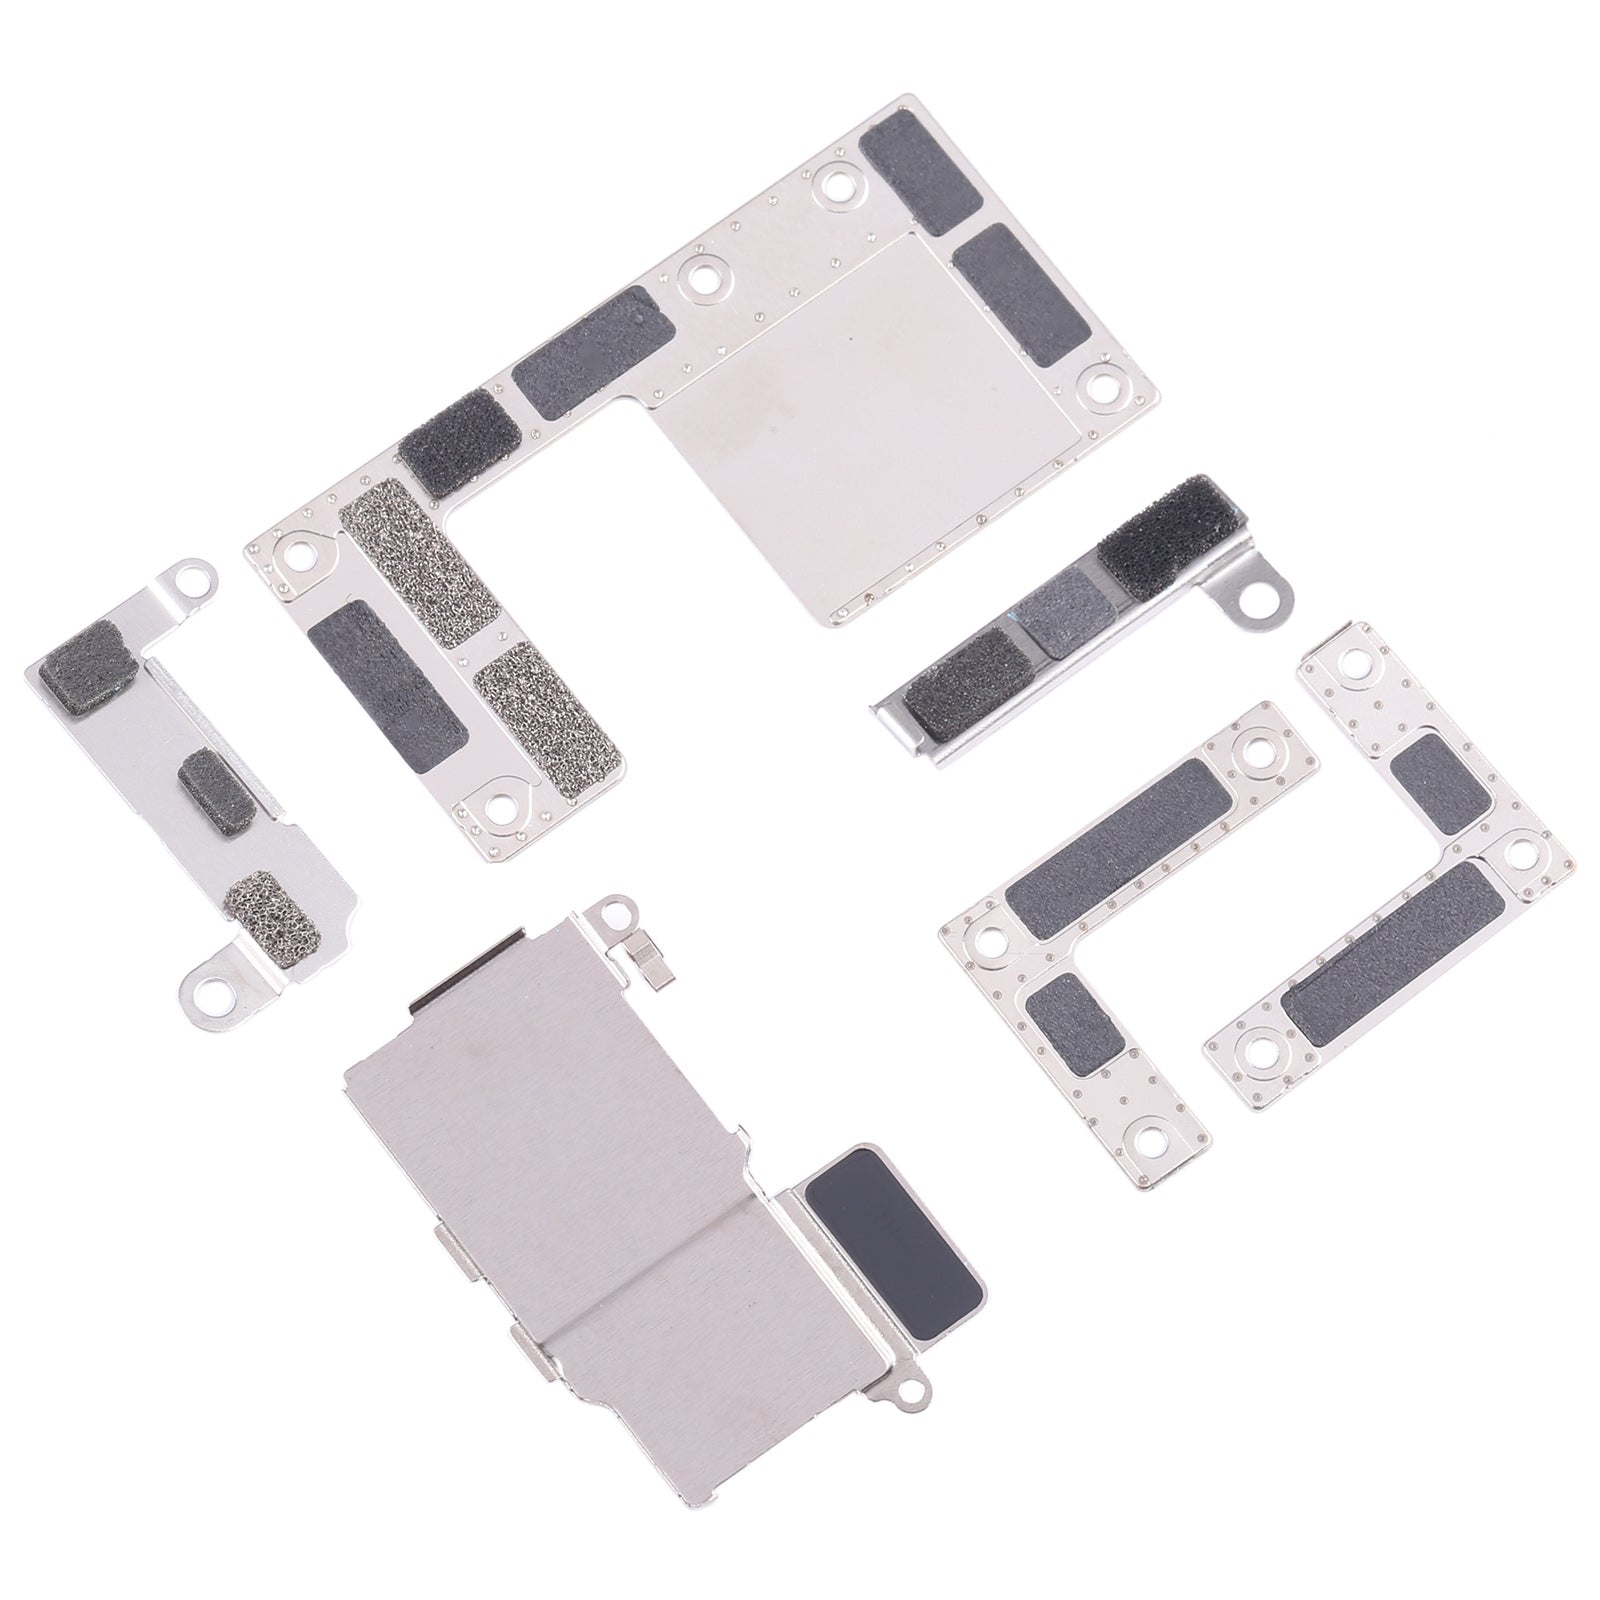 iPhone 11 Internal Metal Parts Pack